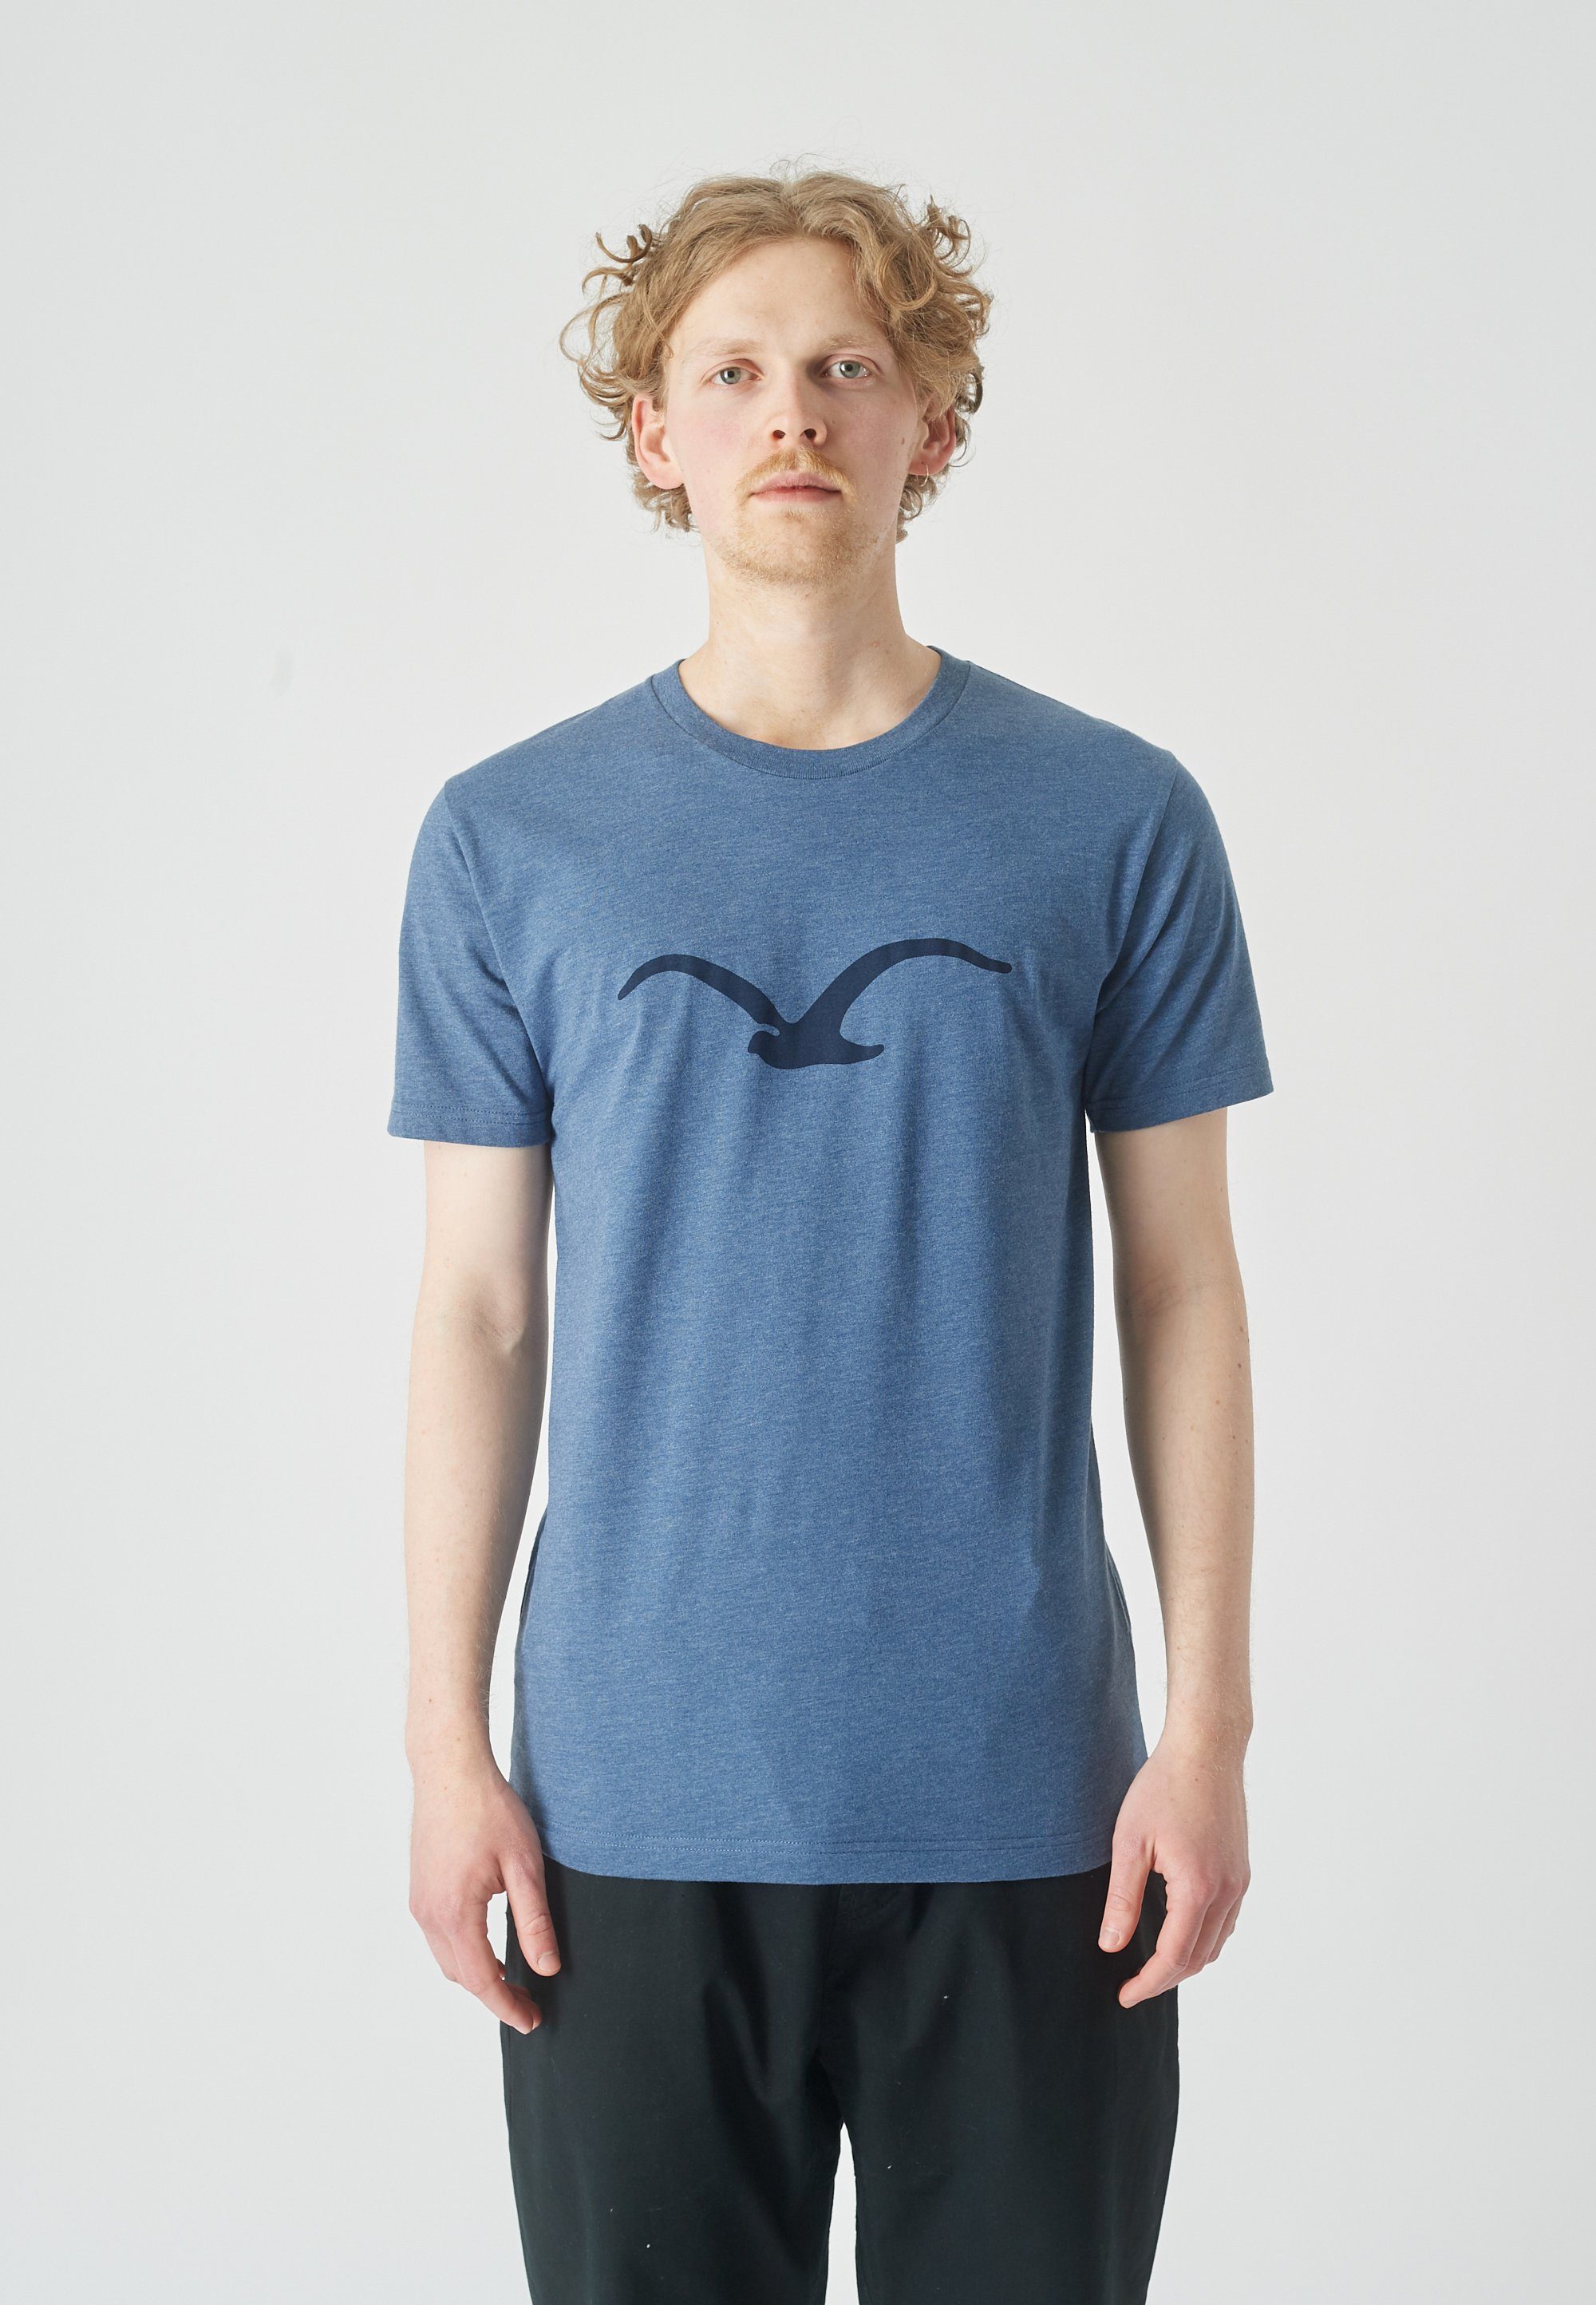 mit T-Shirt klassischem Mowe blau-blau Print Cleptomanicx